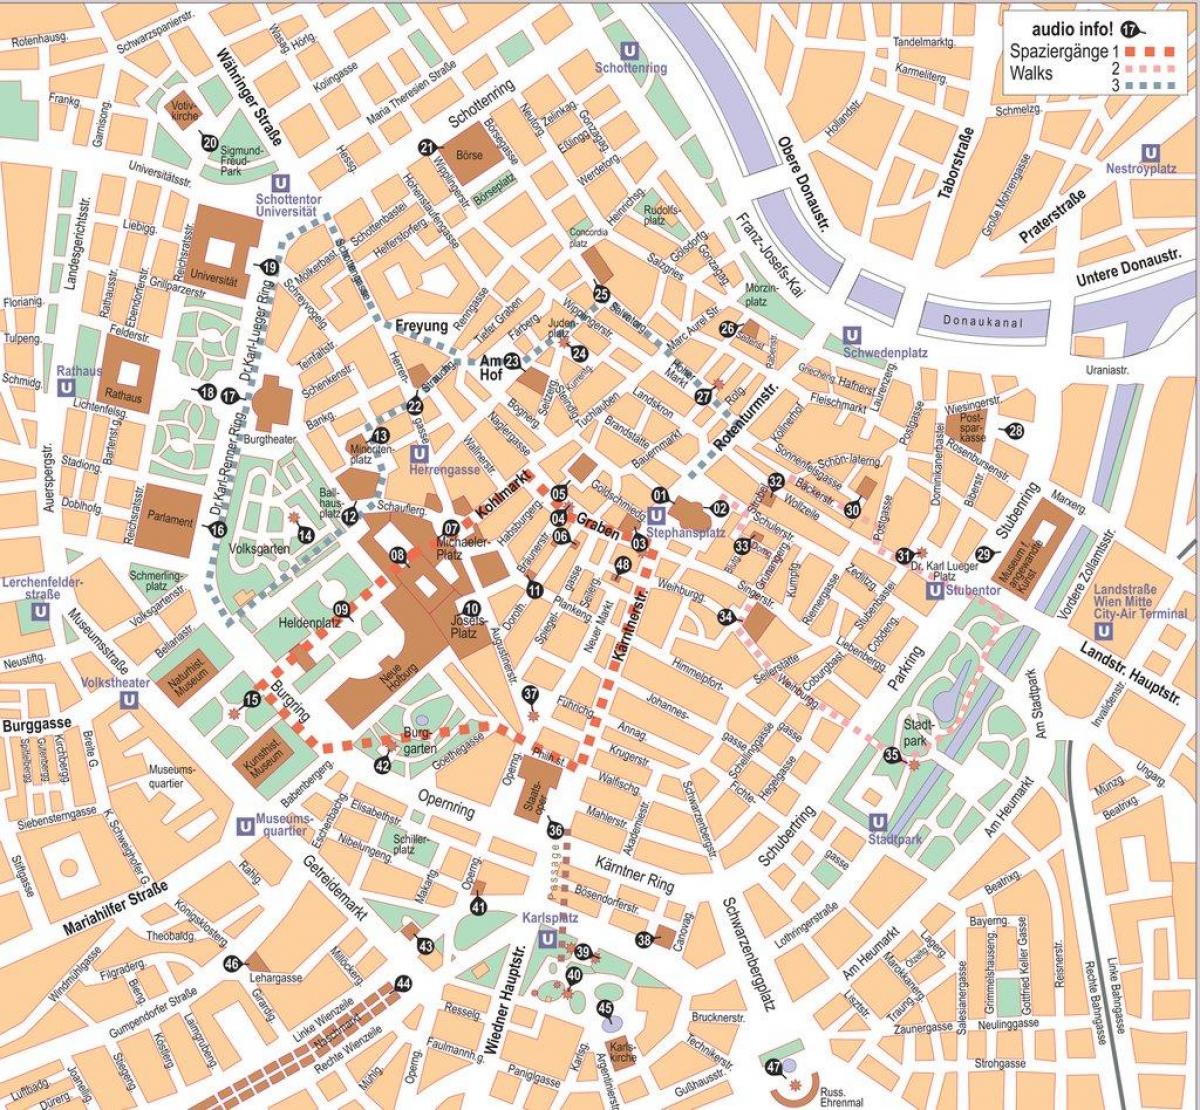 offline mapa de Viena